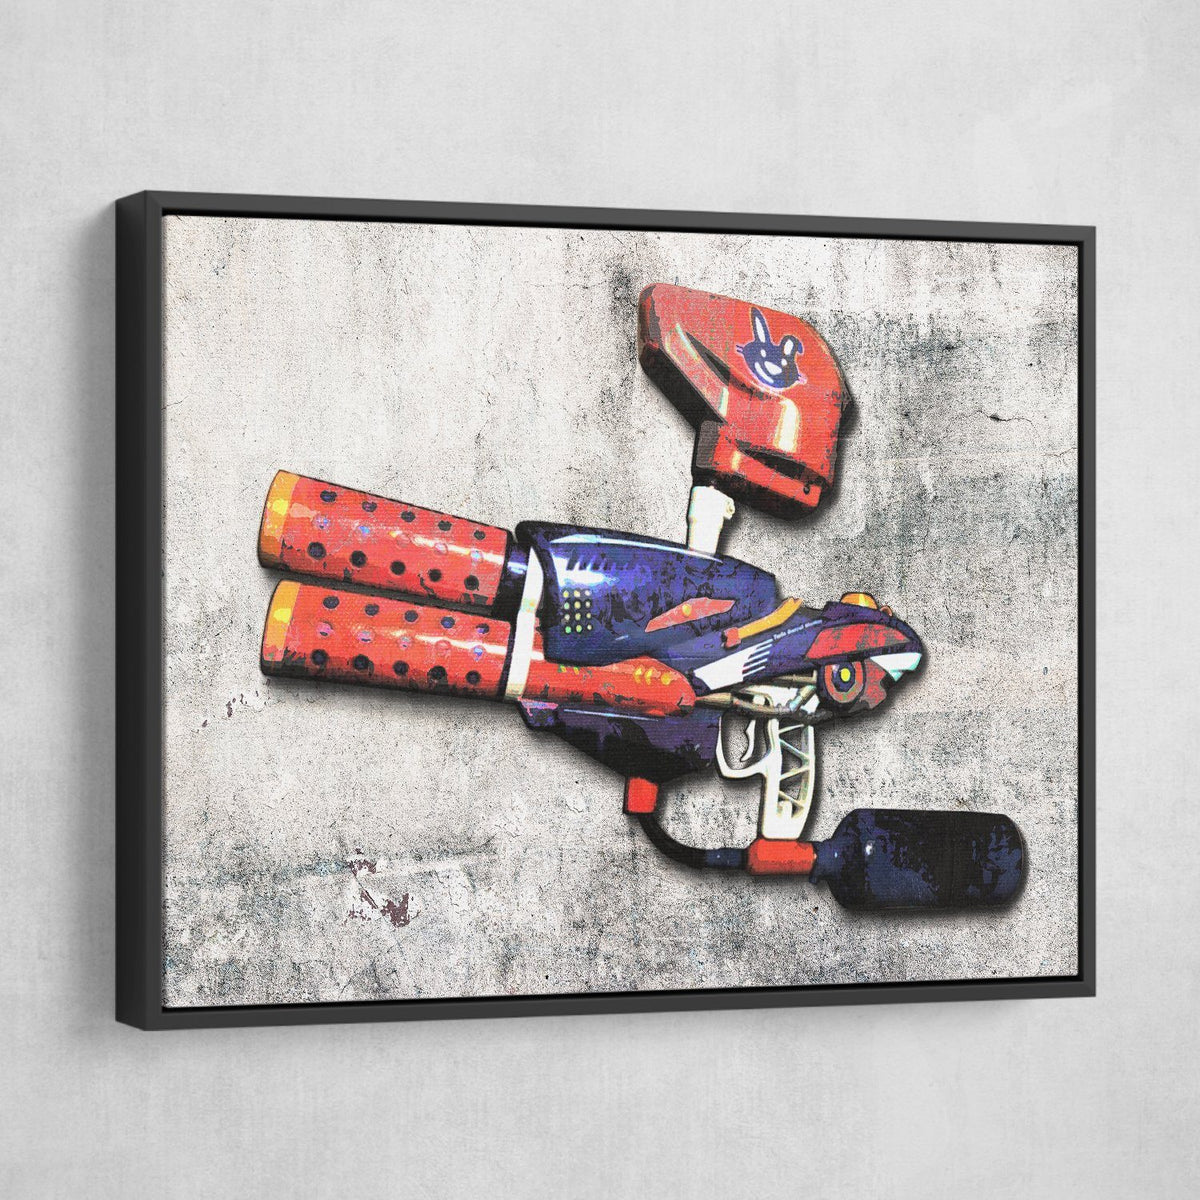 Entourage's ARI GOLD Paintball Gun Poster Photo Painting on CANVAS Wall Art